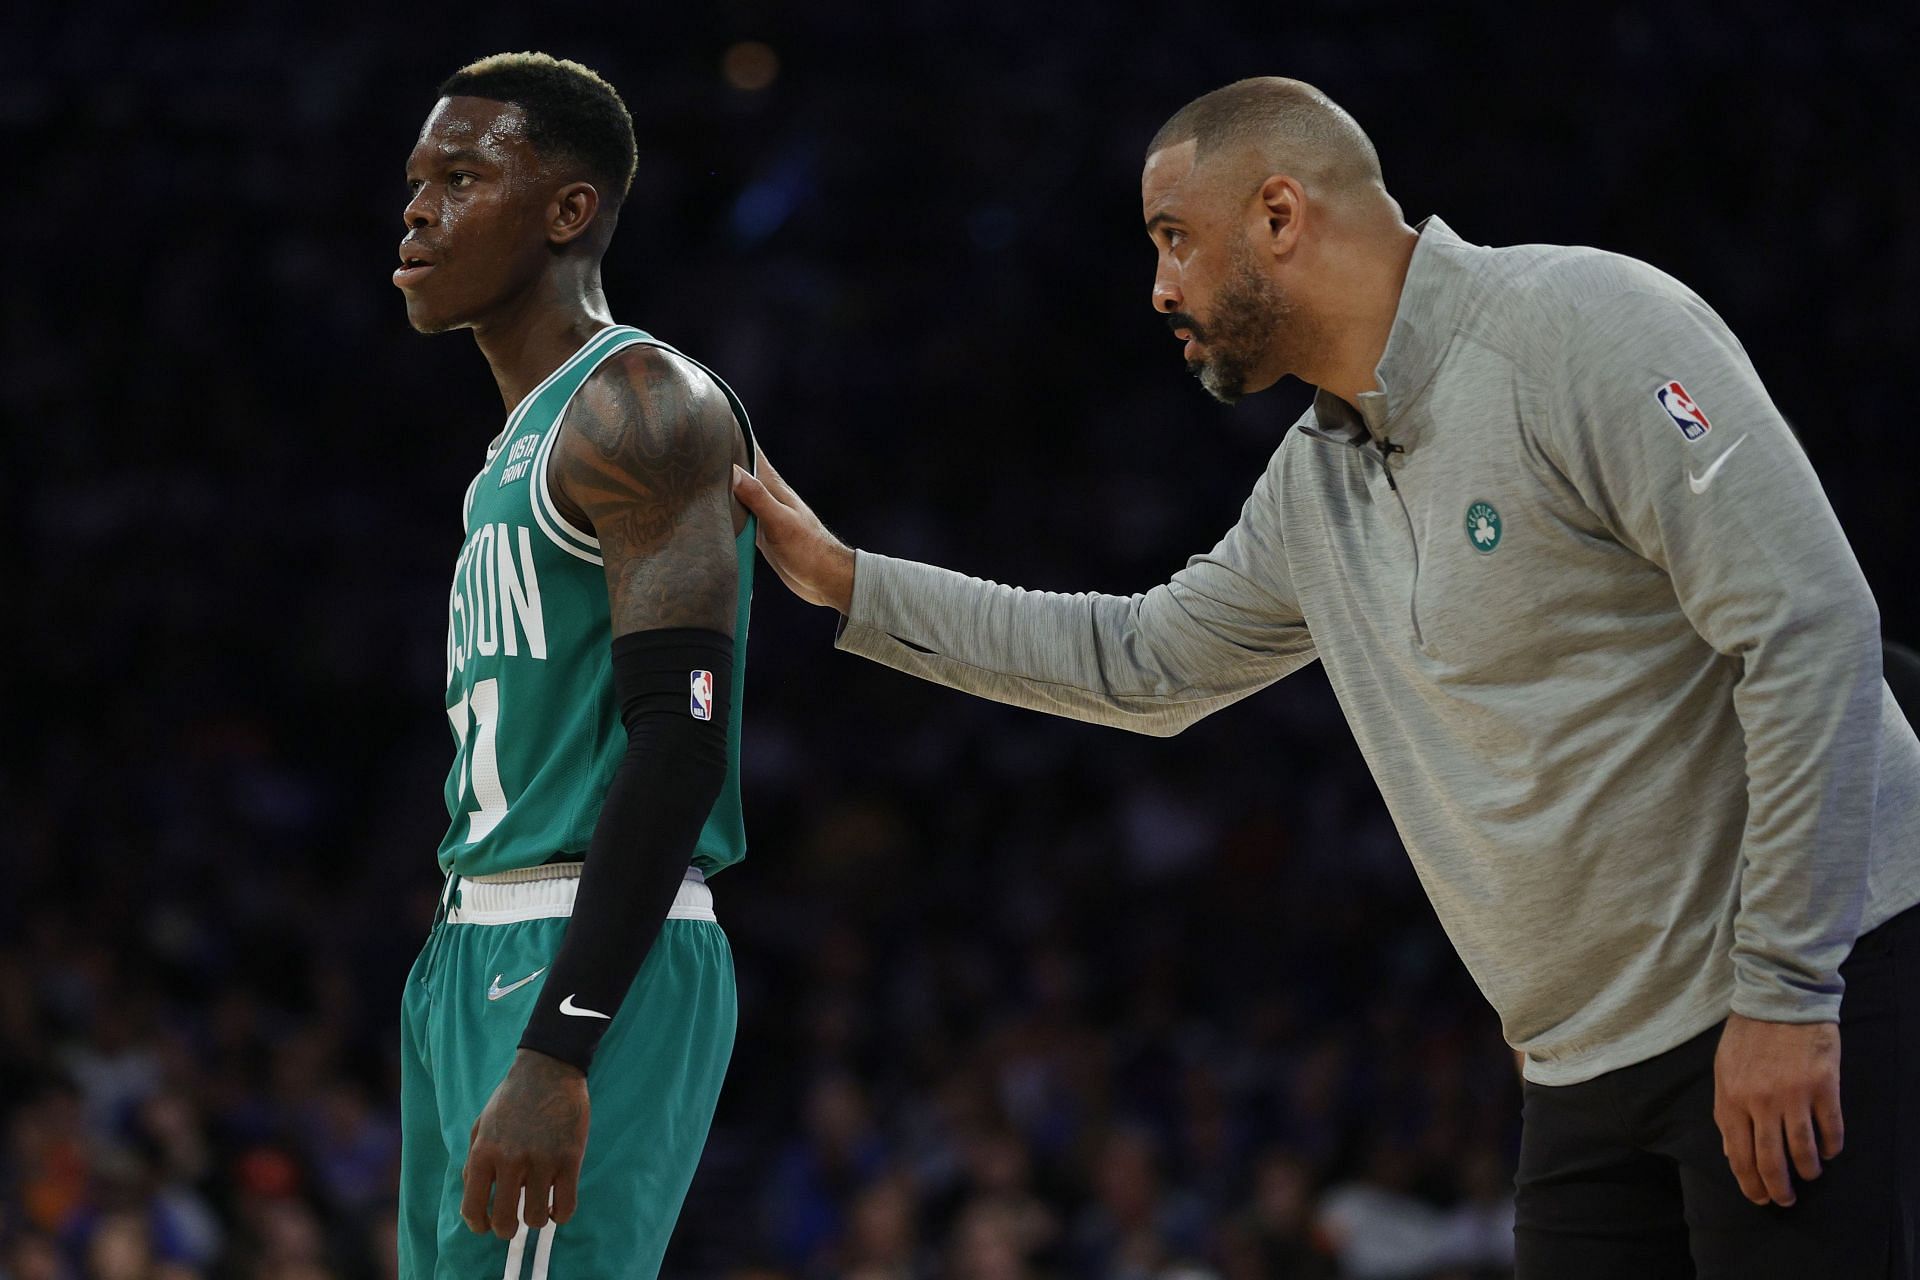 Dennis Schroder talks to coach Ime Udoka during the Boston Celtics v New York Knicks match